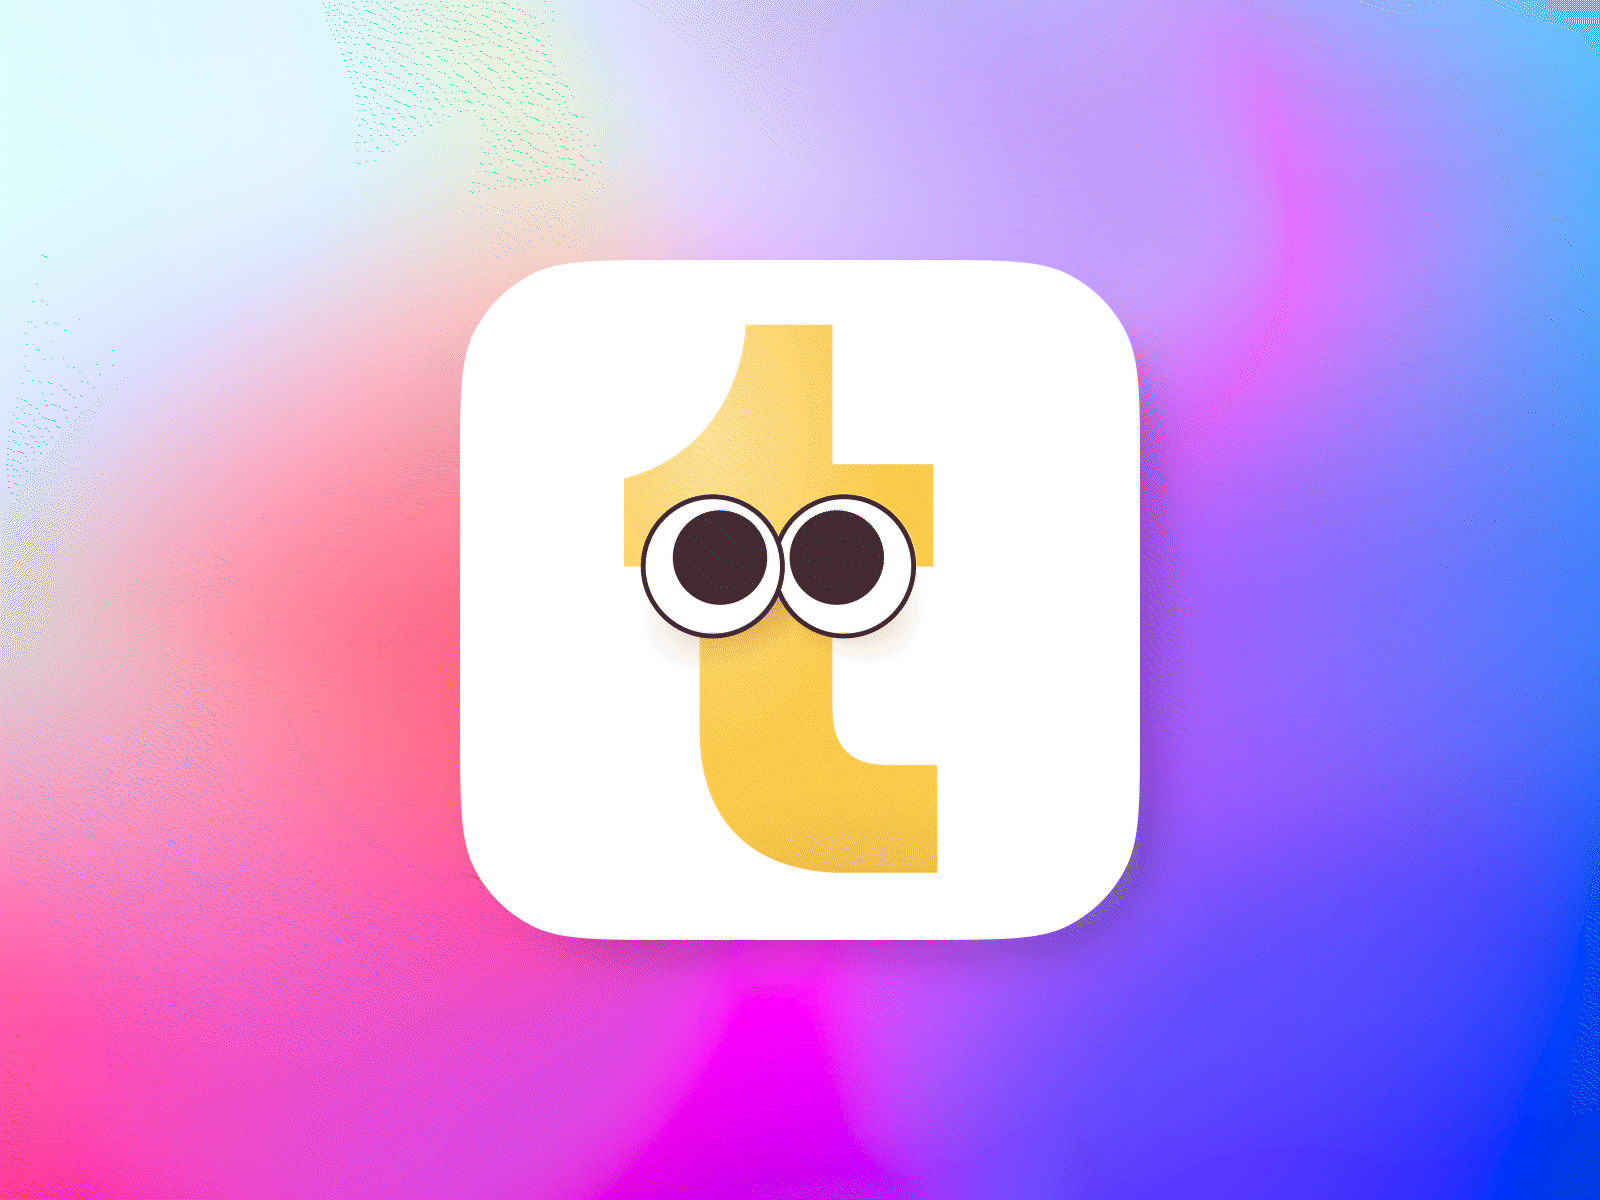 Tummoji - A Dynamic Tumblr App icon app icon app icon design brand brandidentity branding dynamic icon dynamic logo emoji logo logo design logotype playoff rebrading social media tumblr